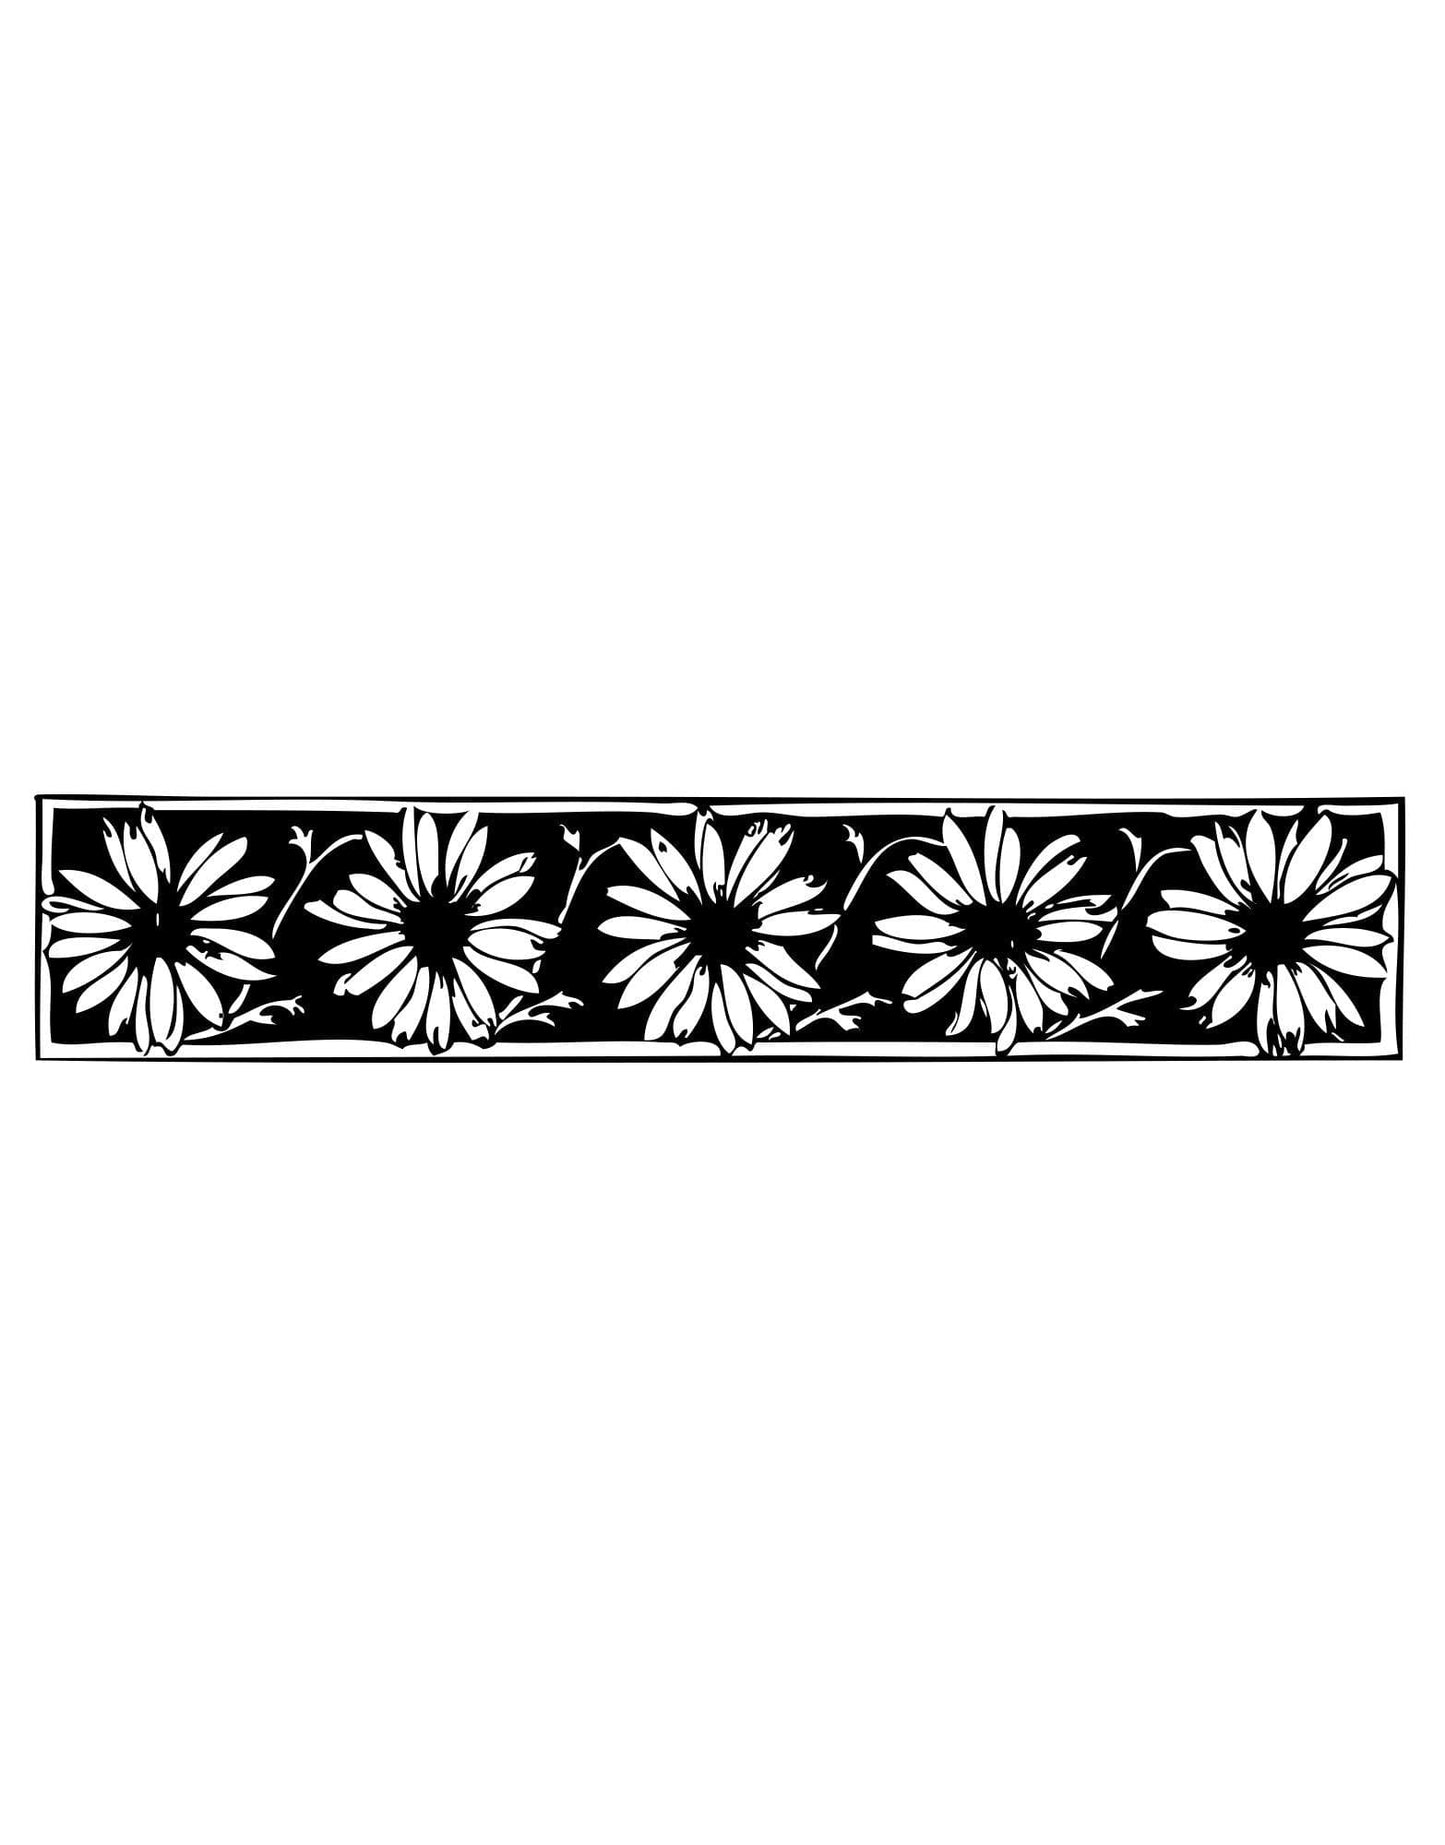 Vinyl Wall Decal Sticker Daisy Flower Pattern Borders #264